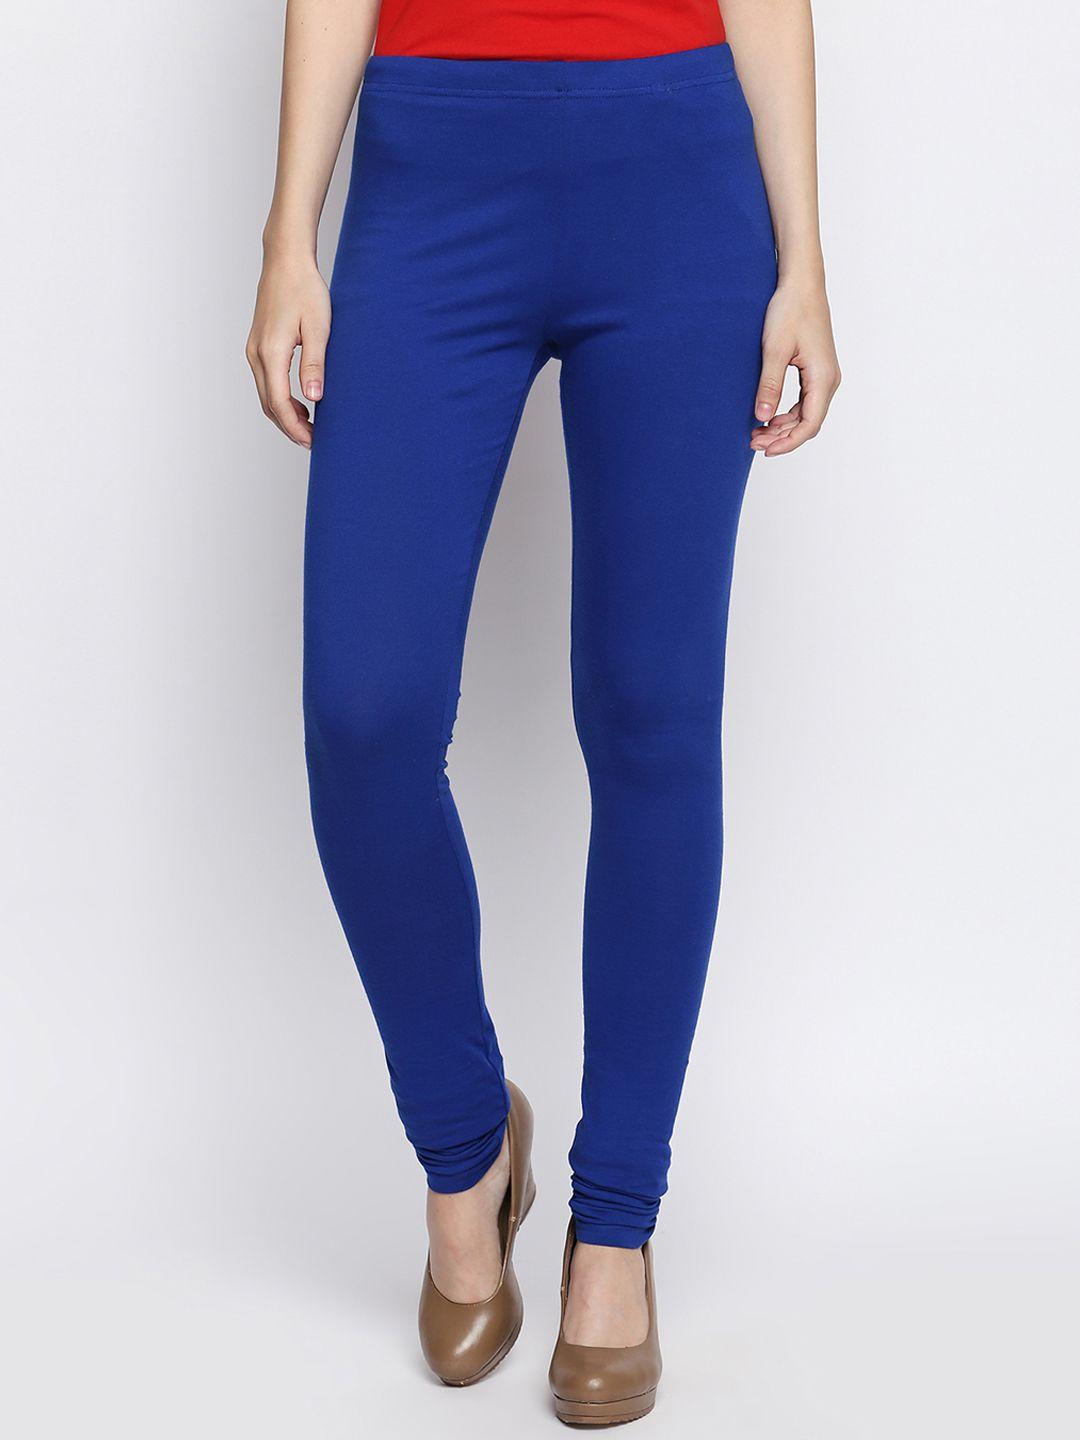 rangmanch by pantaloons women blue solid slim fit leggings